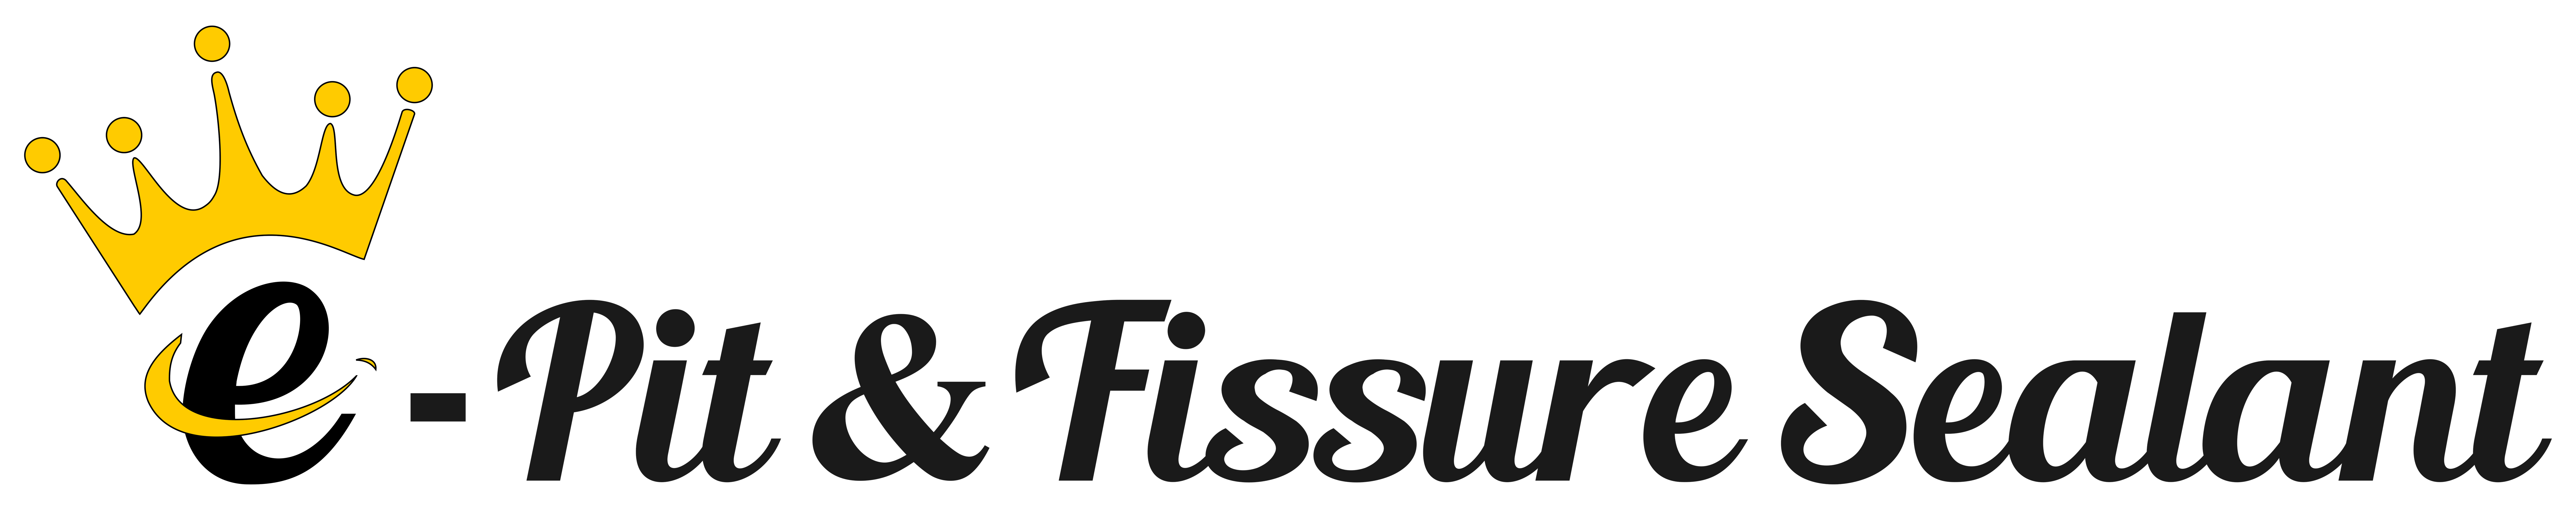 benefits Fissure